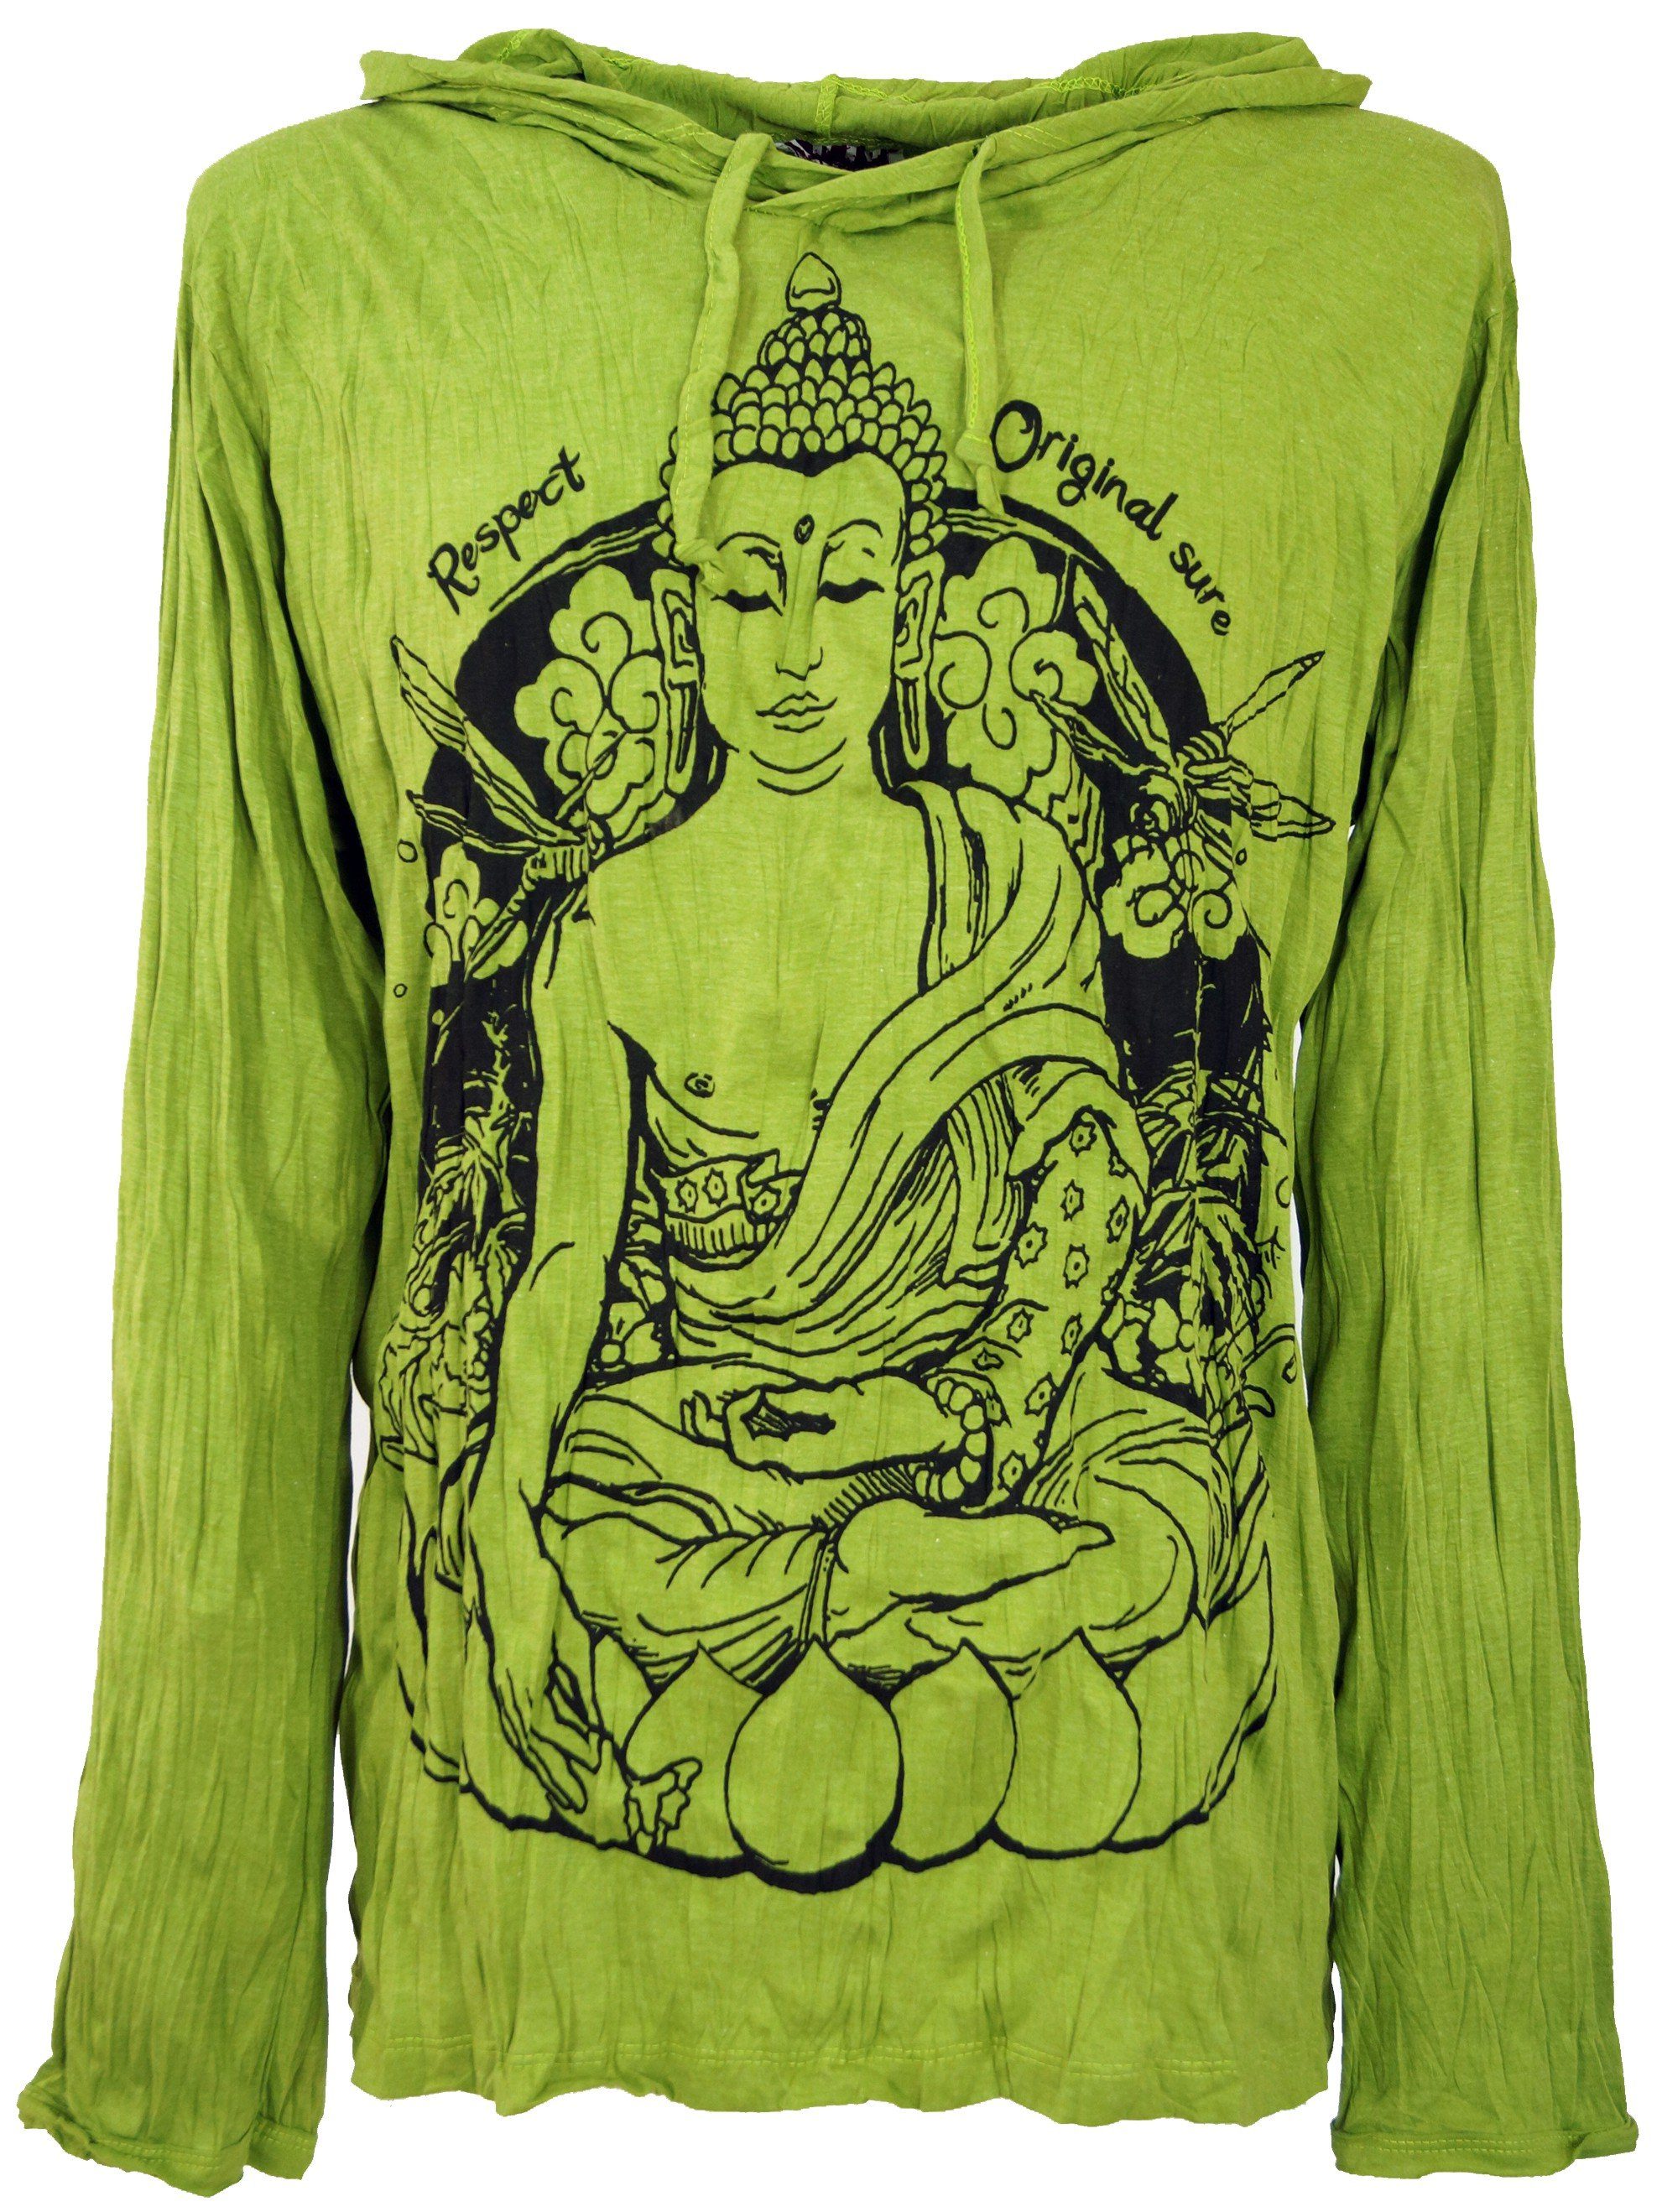 Guru-Shop T-Shirt Sure Langarmshirt, Kapuzenshirt Meditation.. Goa Style, Festival, alternative Bekleidung lemon